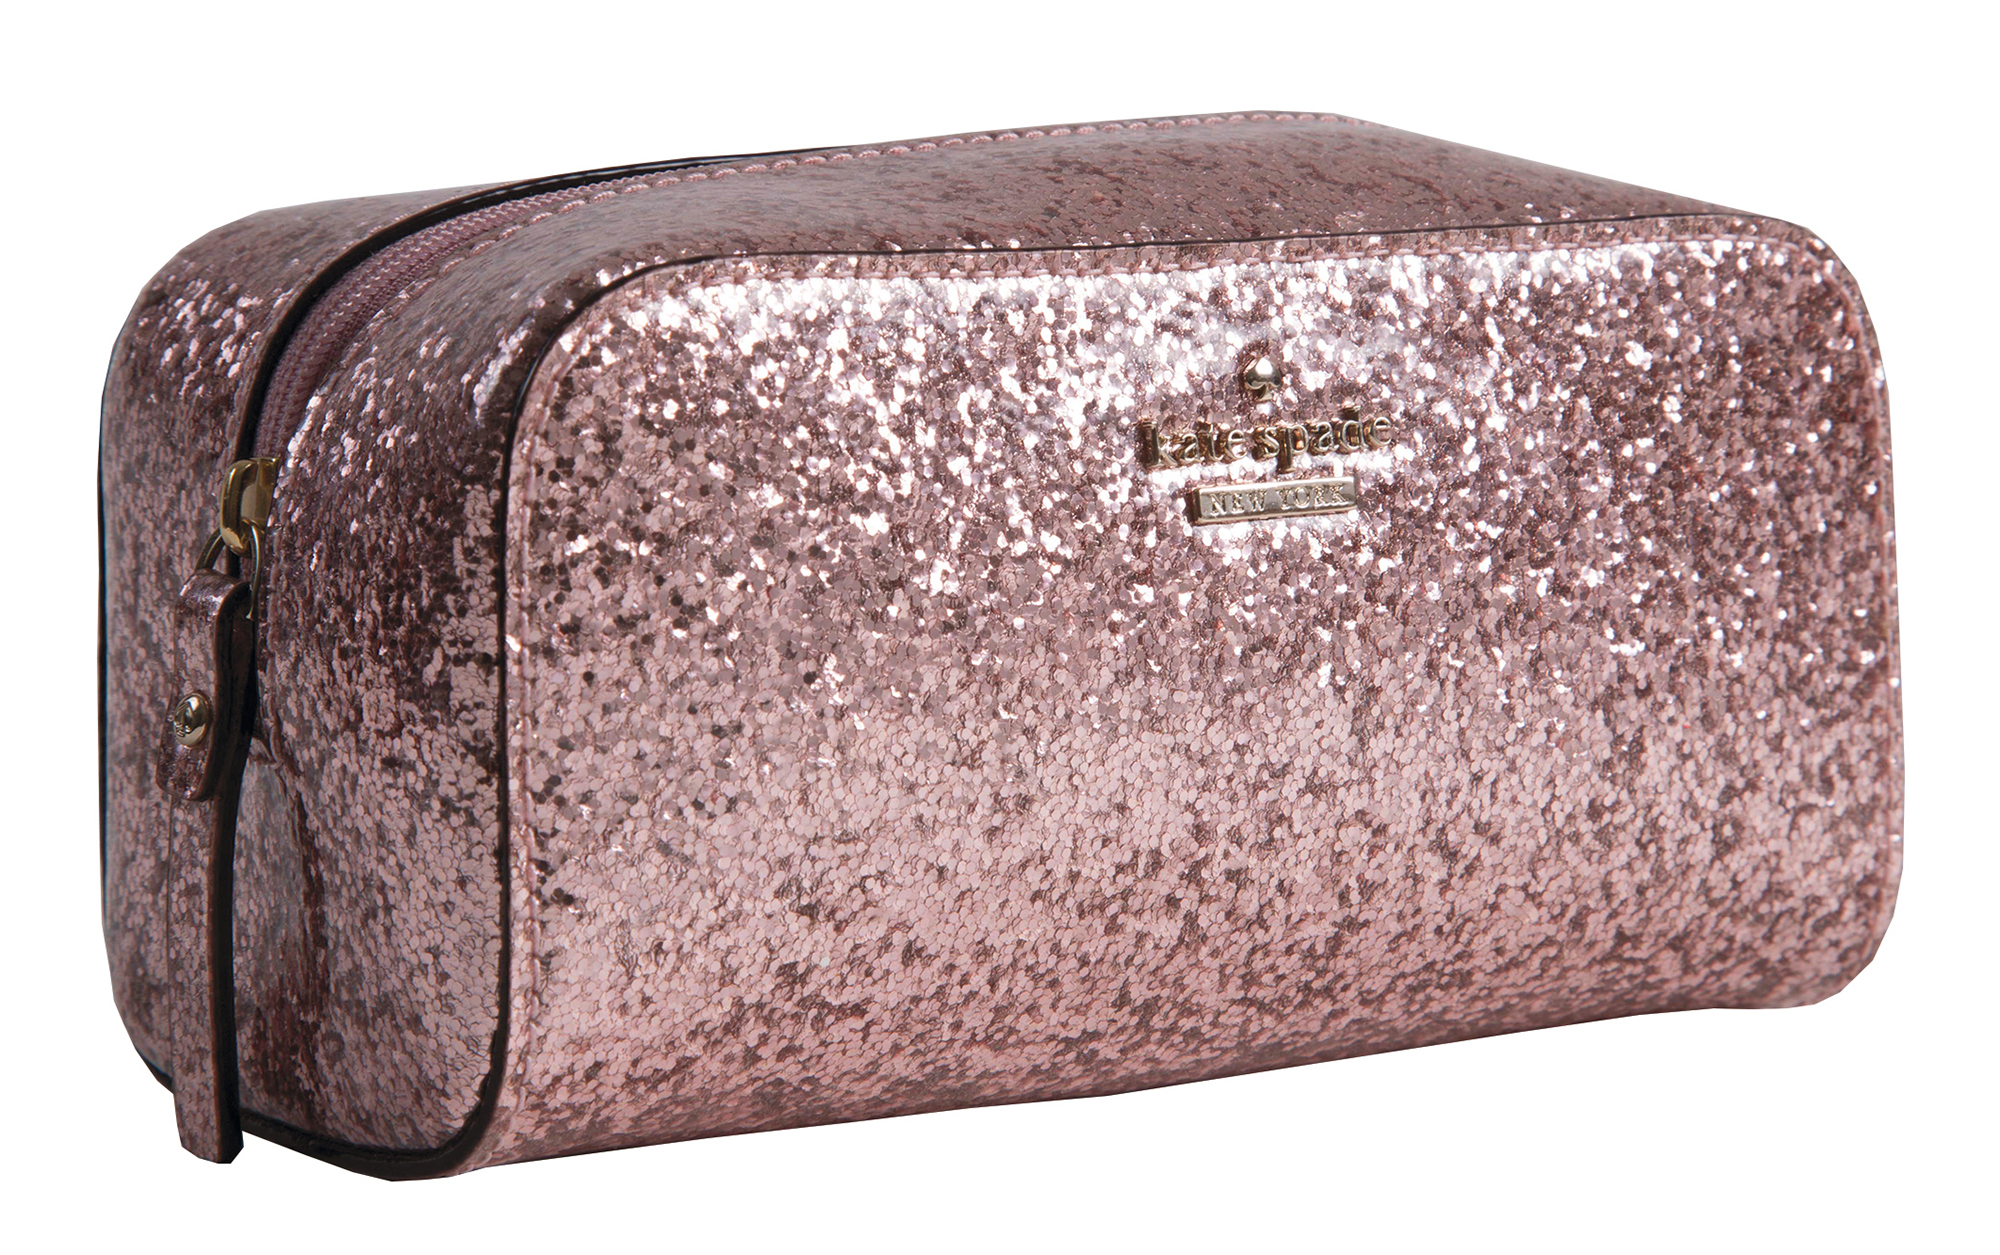 Kate Spade ”Ezra Cosmetic Bag,” $60 at Gwynn’s of Mount Pleasant